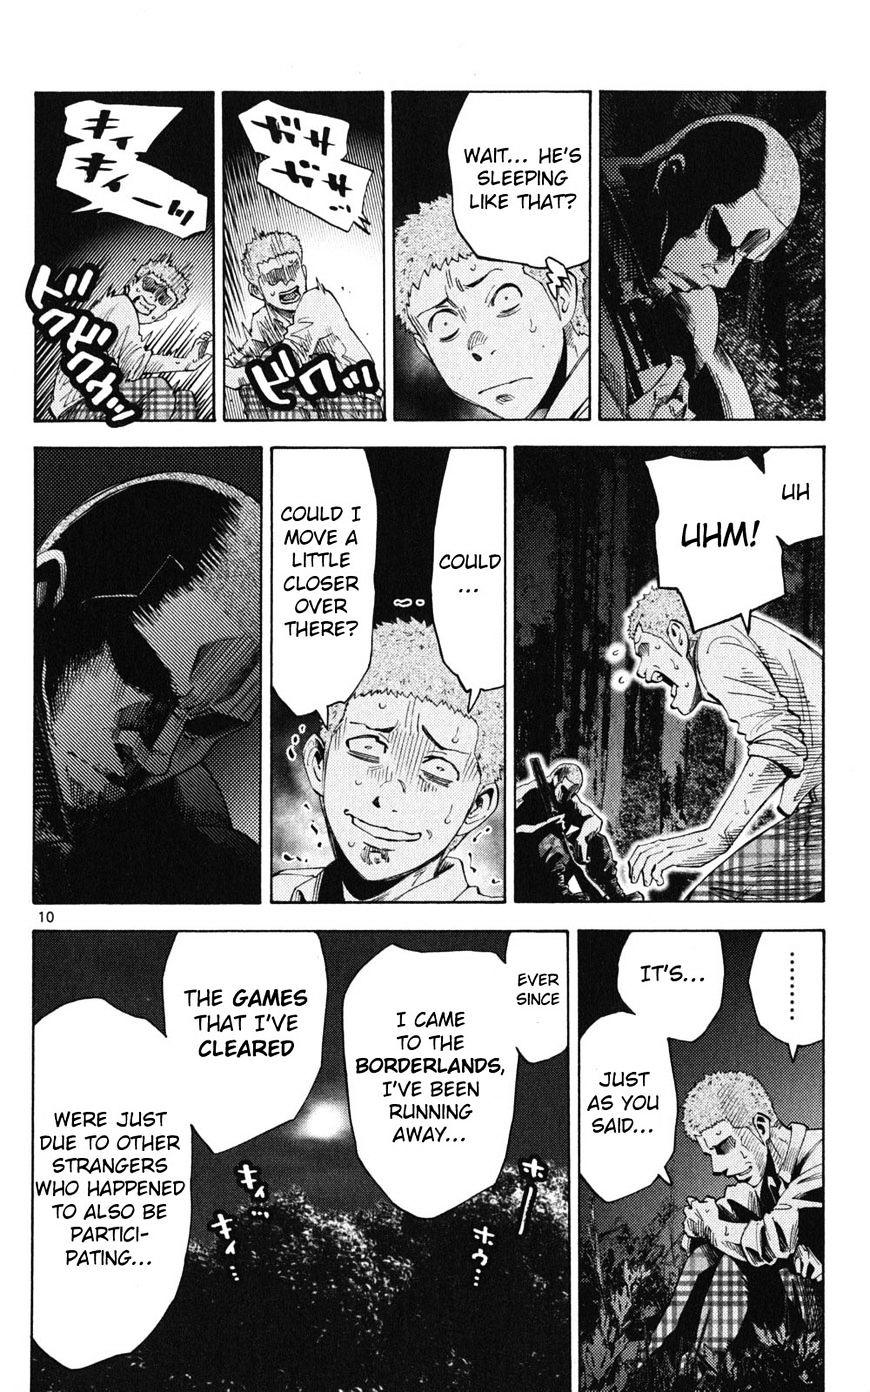 Imawa No Kuni No Alice Chapter 49.2 : Side Story 5 - King Of Spades (2) page 10 - Mangakakalot